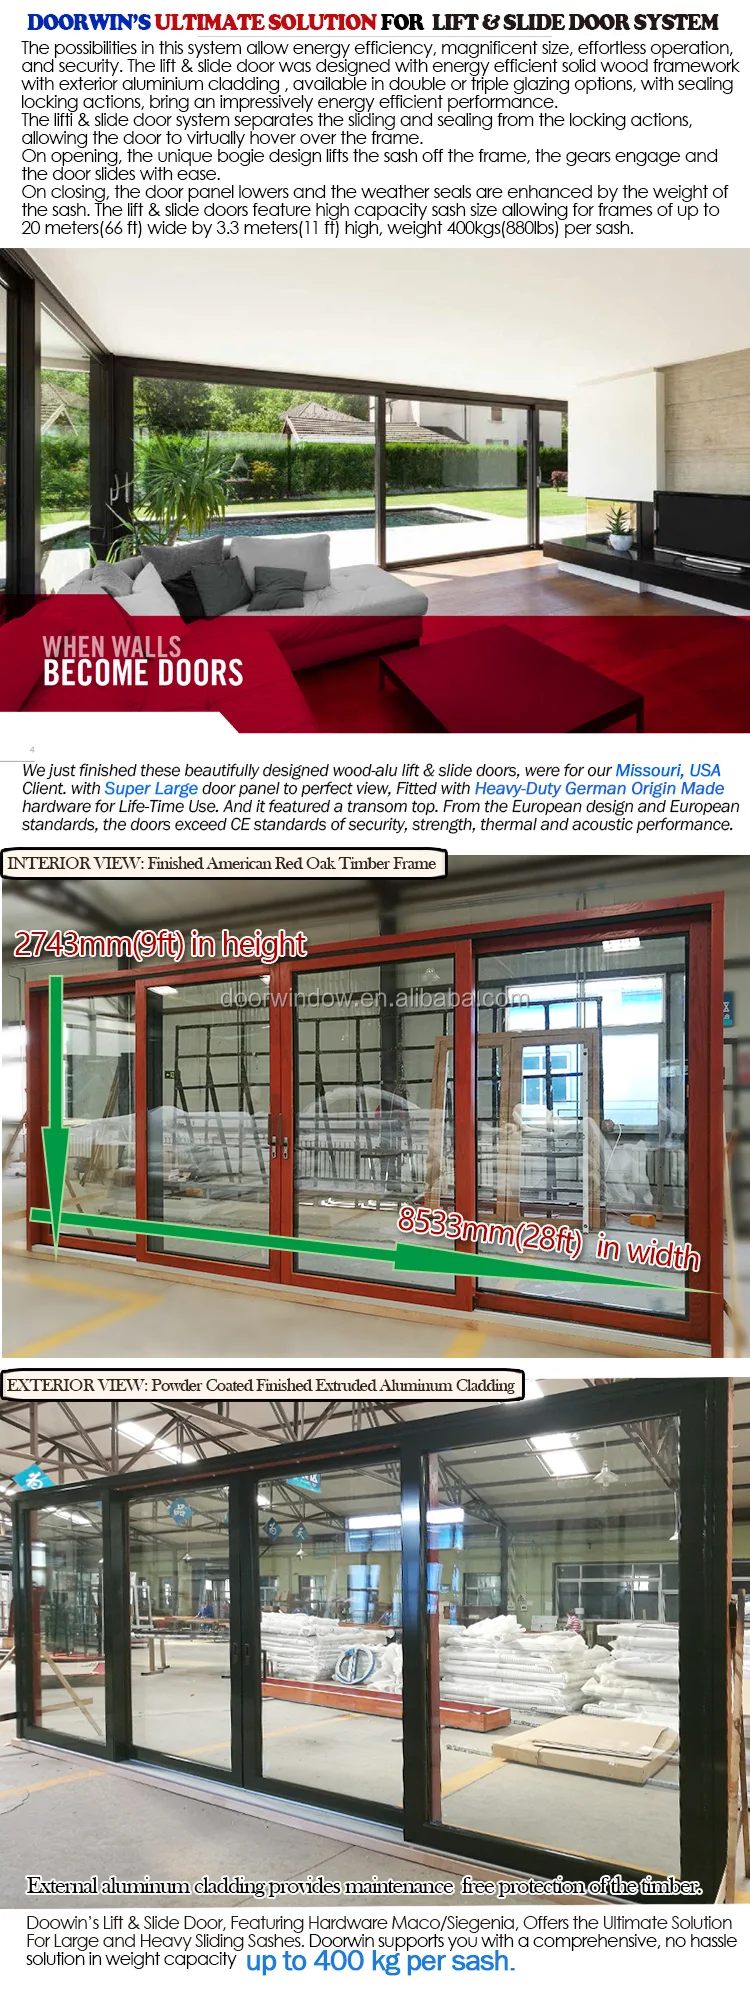 Aluminum door jamb frameless glass frame details